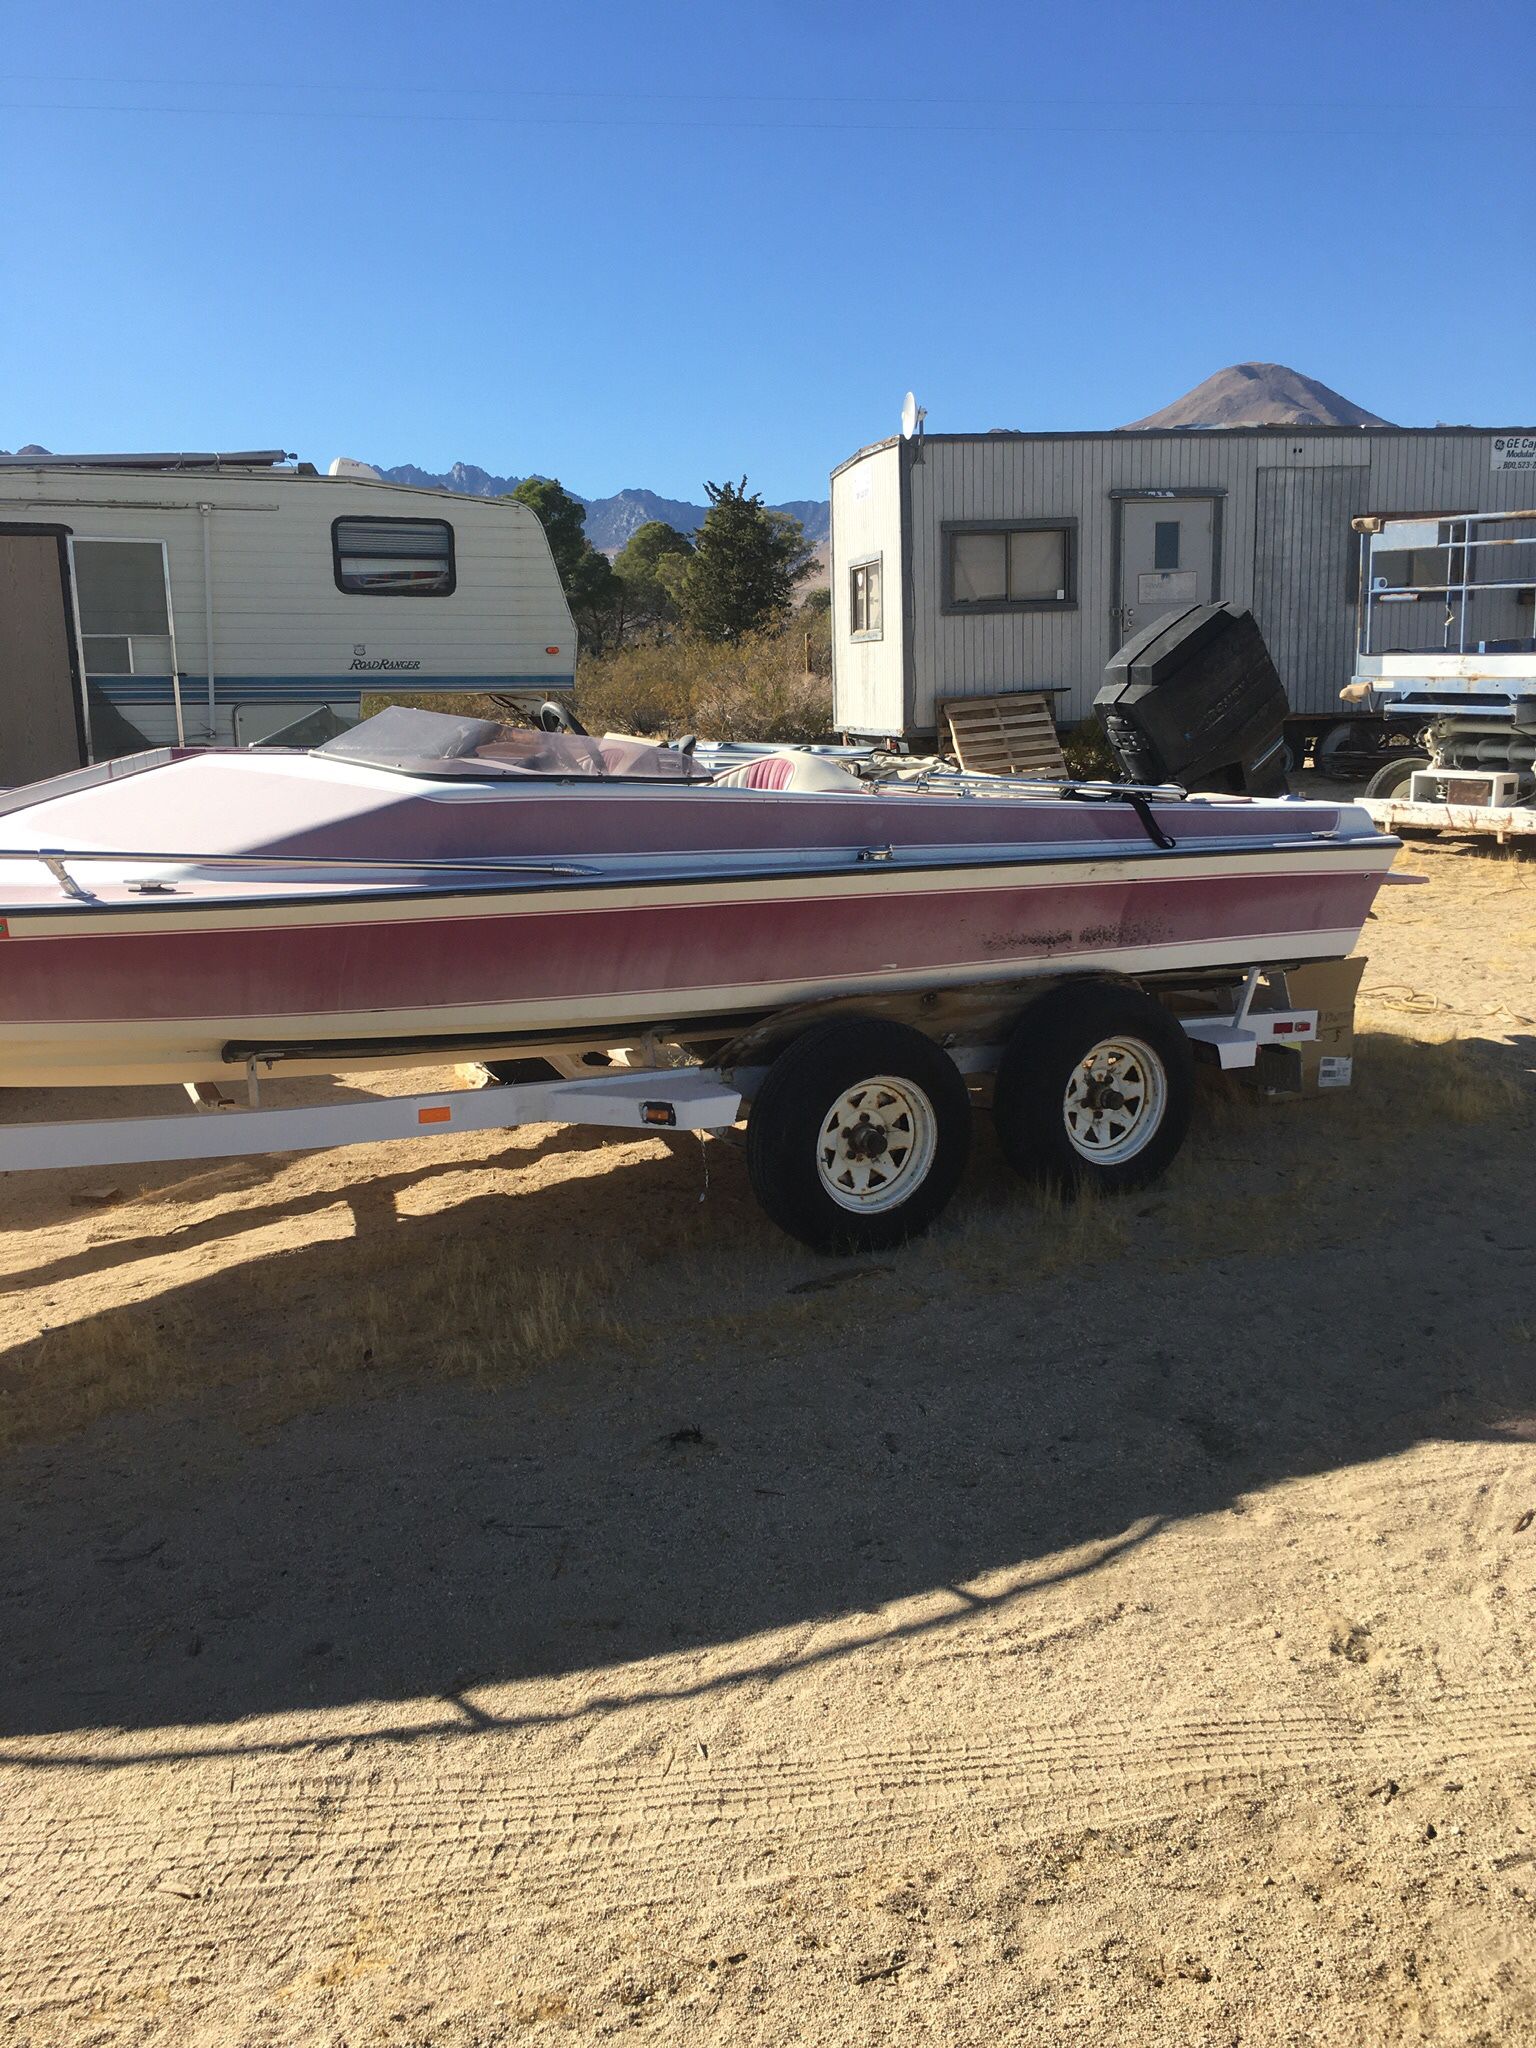 225hp Mercury Ski Boat W/ Trailer $1,500 